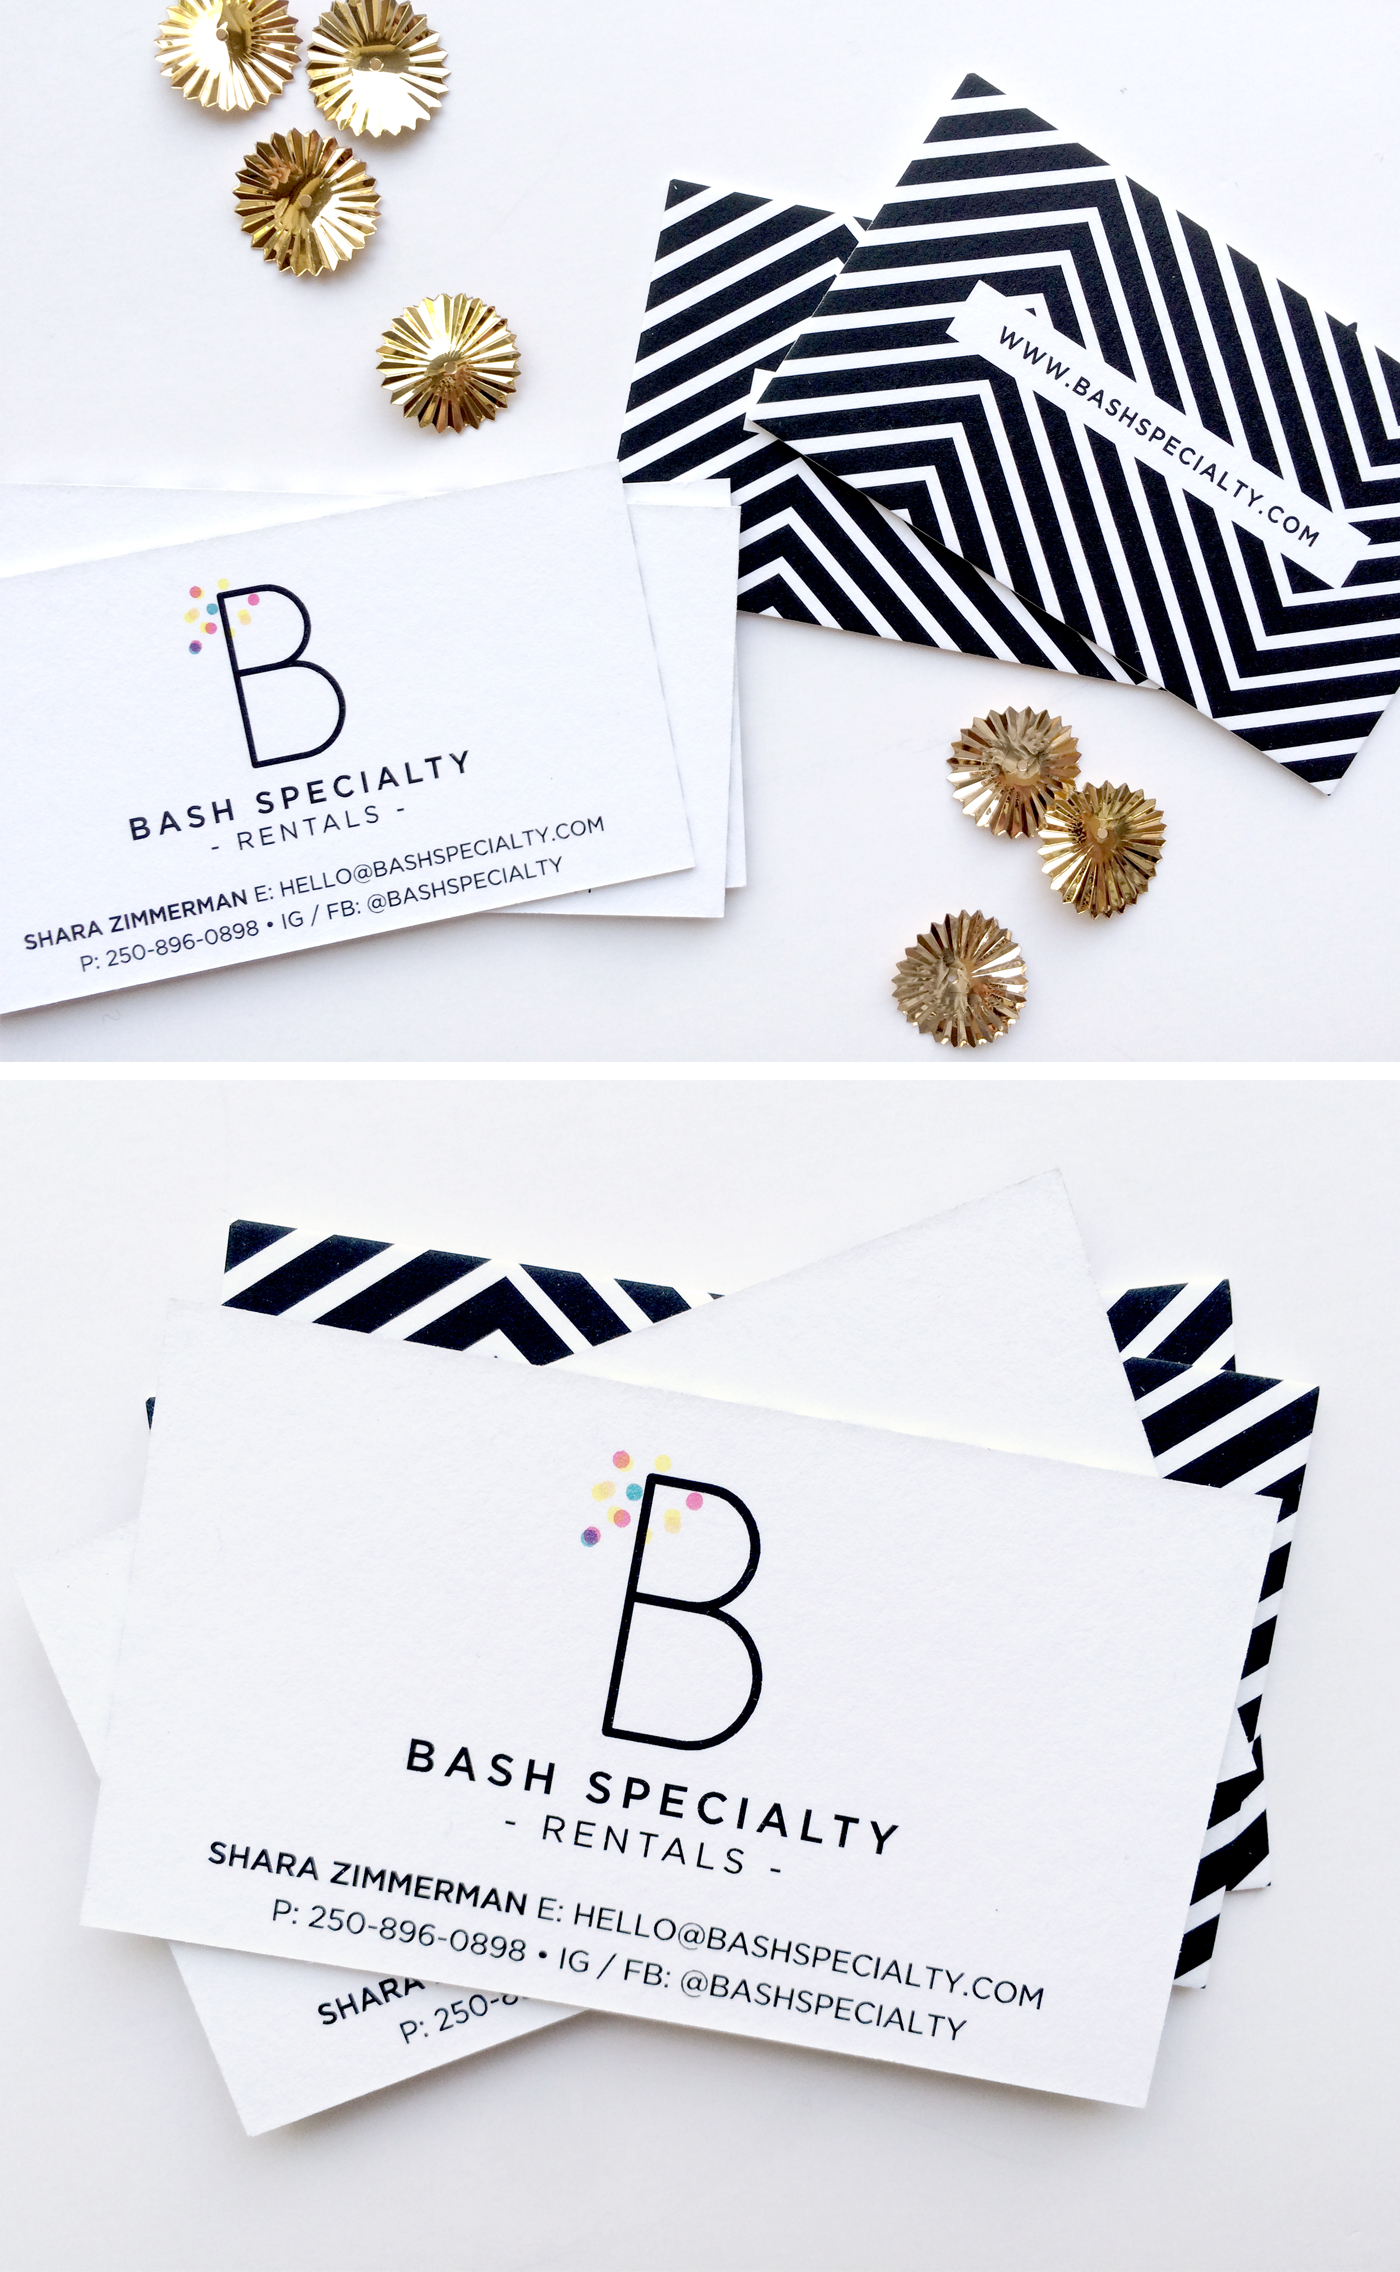 la Happy Bash Specialty Business Cards